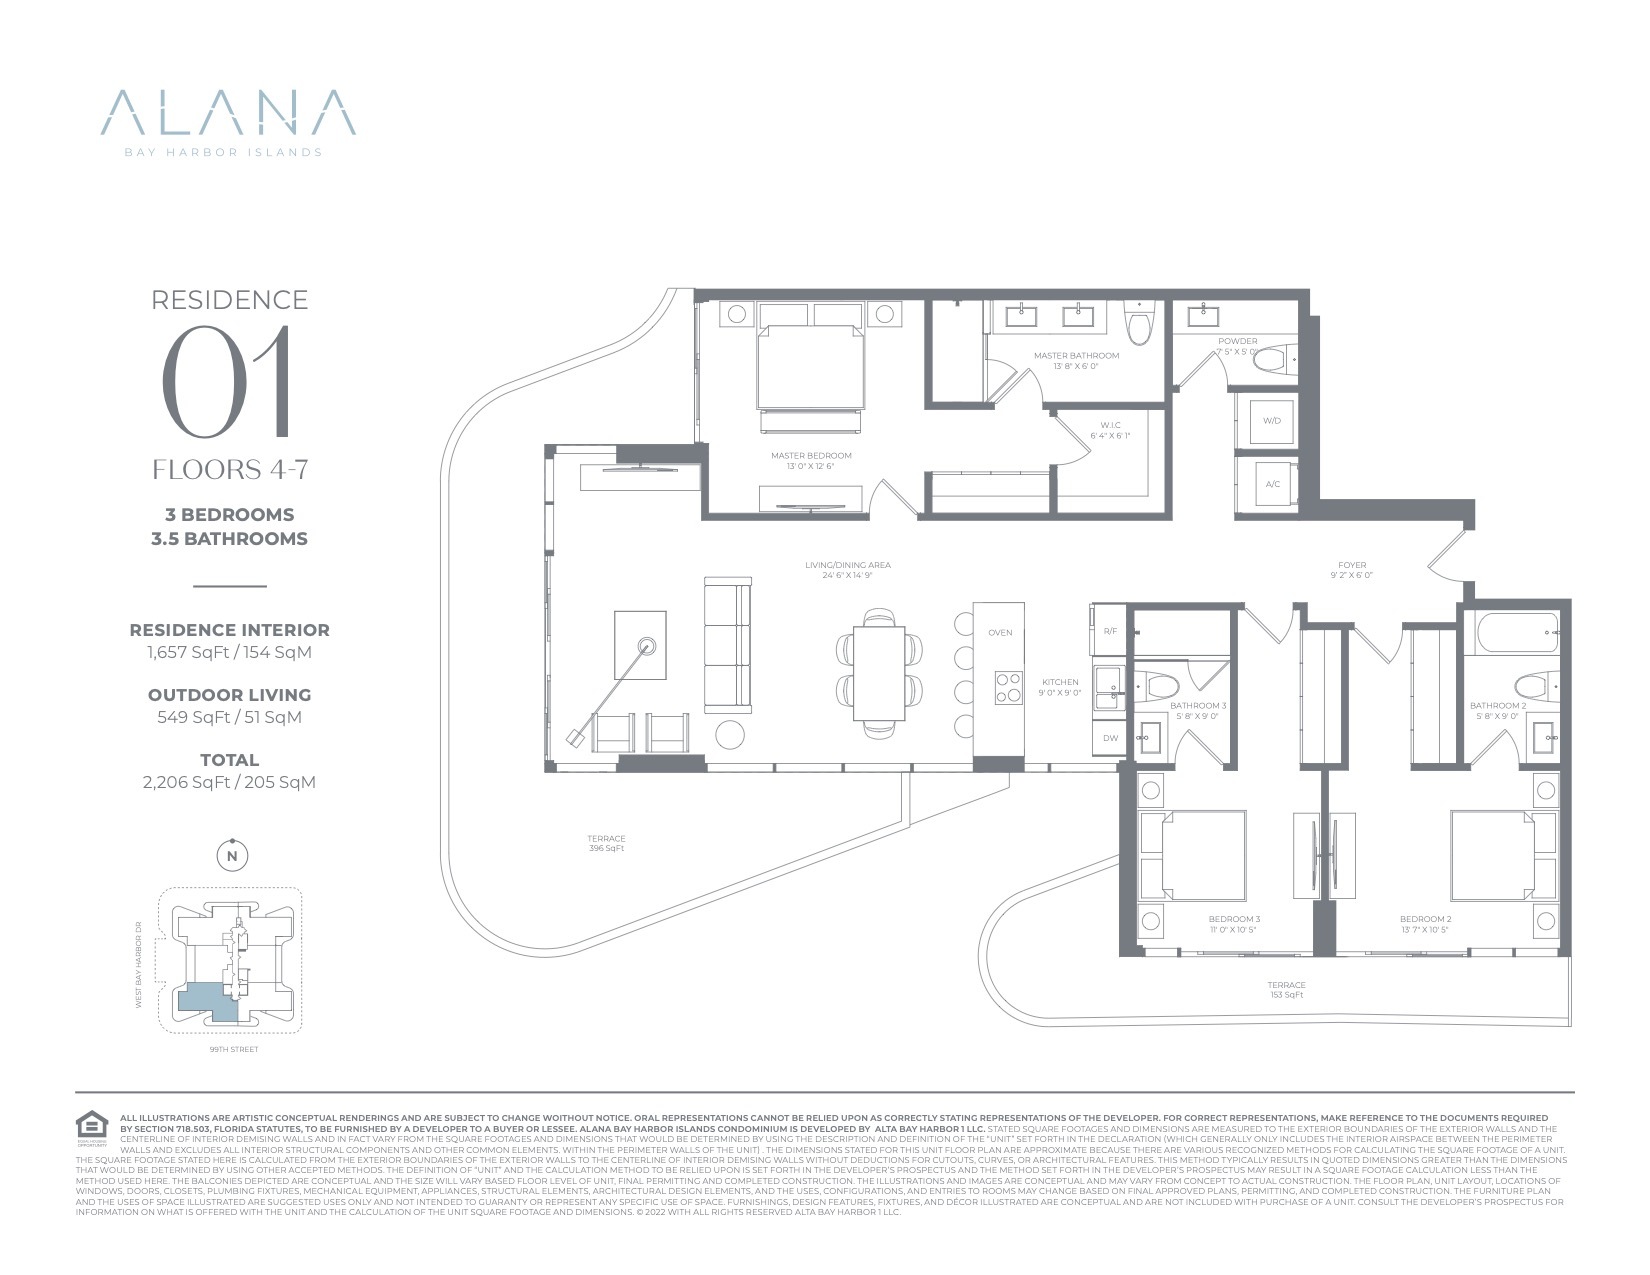 Floor Plan for Alana Bay Harbor Island Floorplans, Residence 01 Floor 4-7